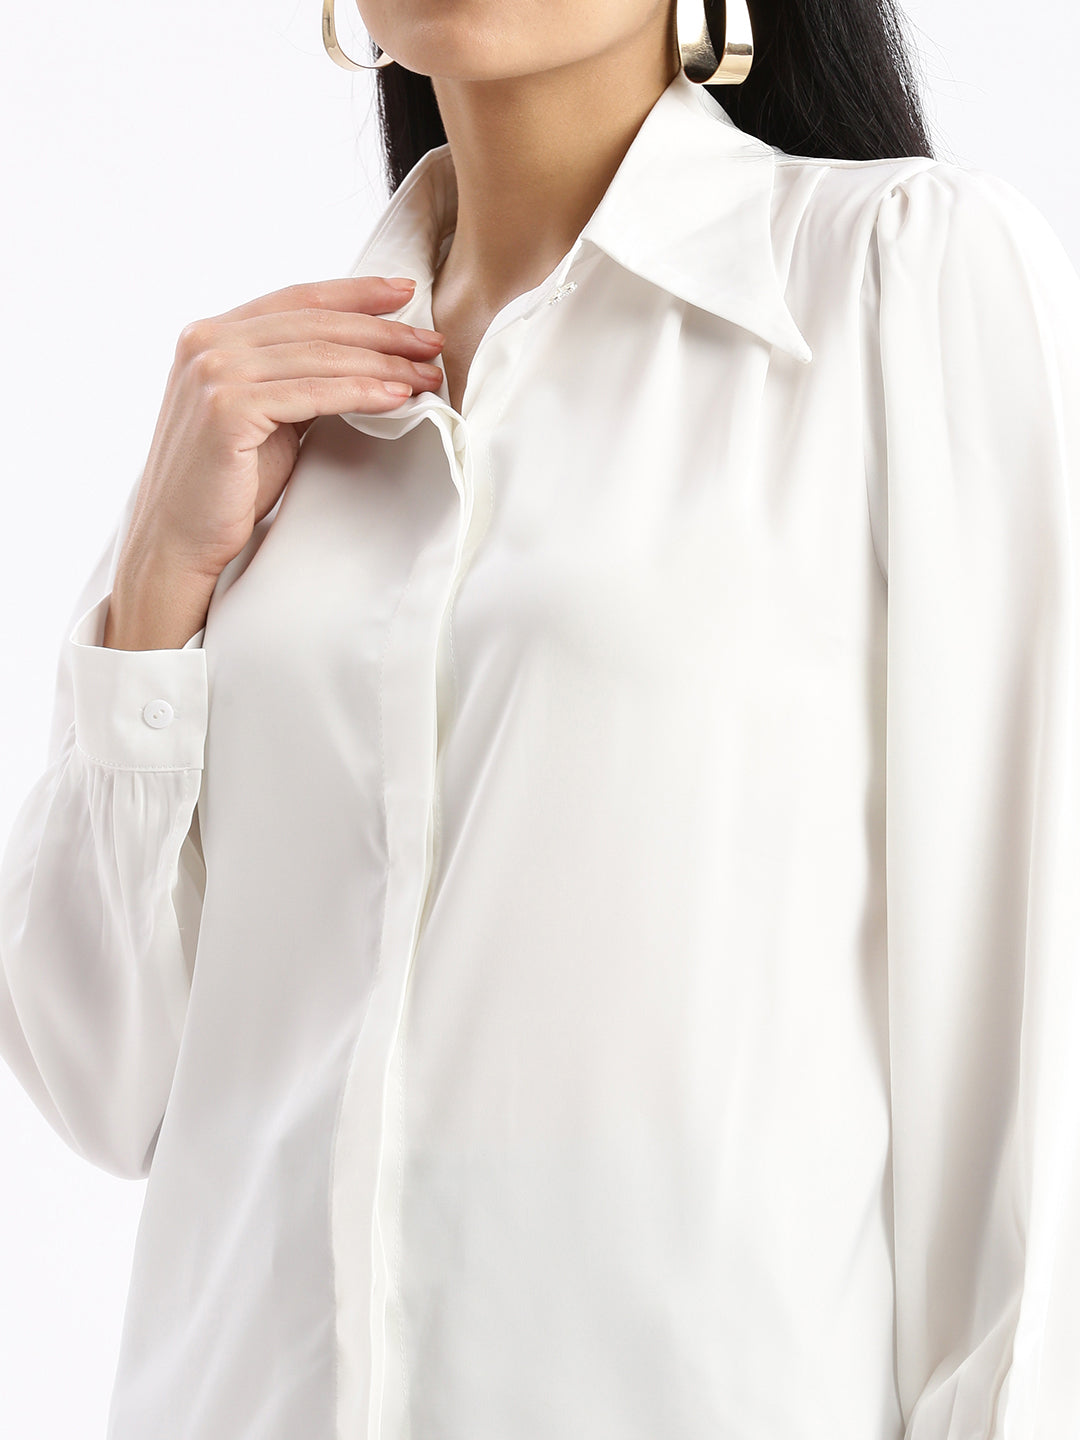 Women Solid White Shirt